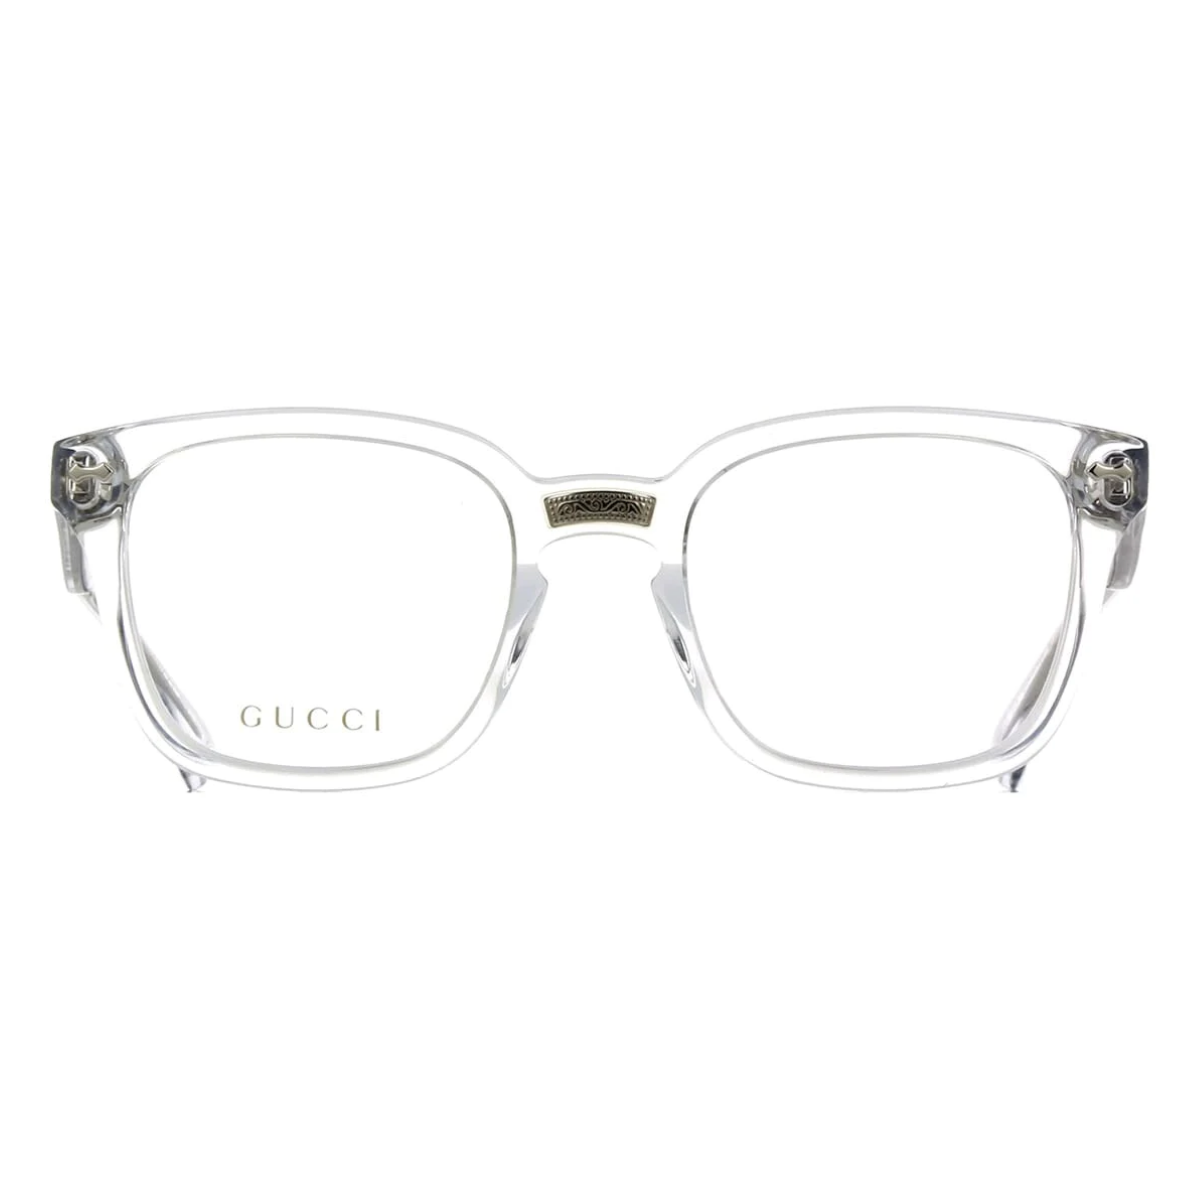 "Gucci Eyewear: Men's Sunglasses and Frames, Model 0184O"